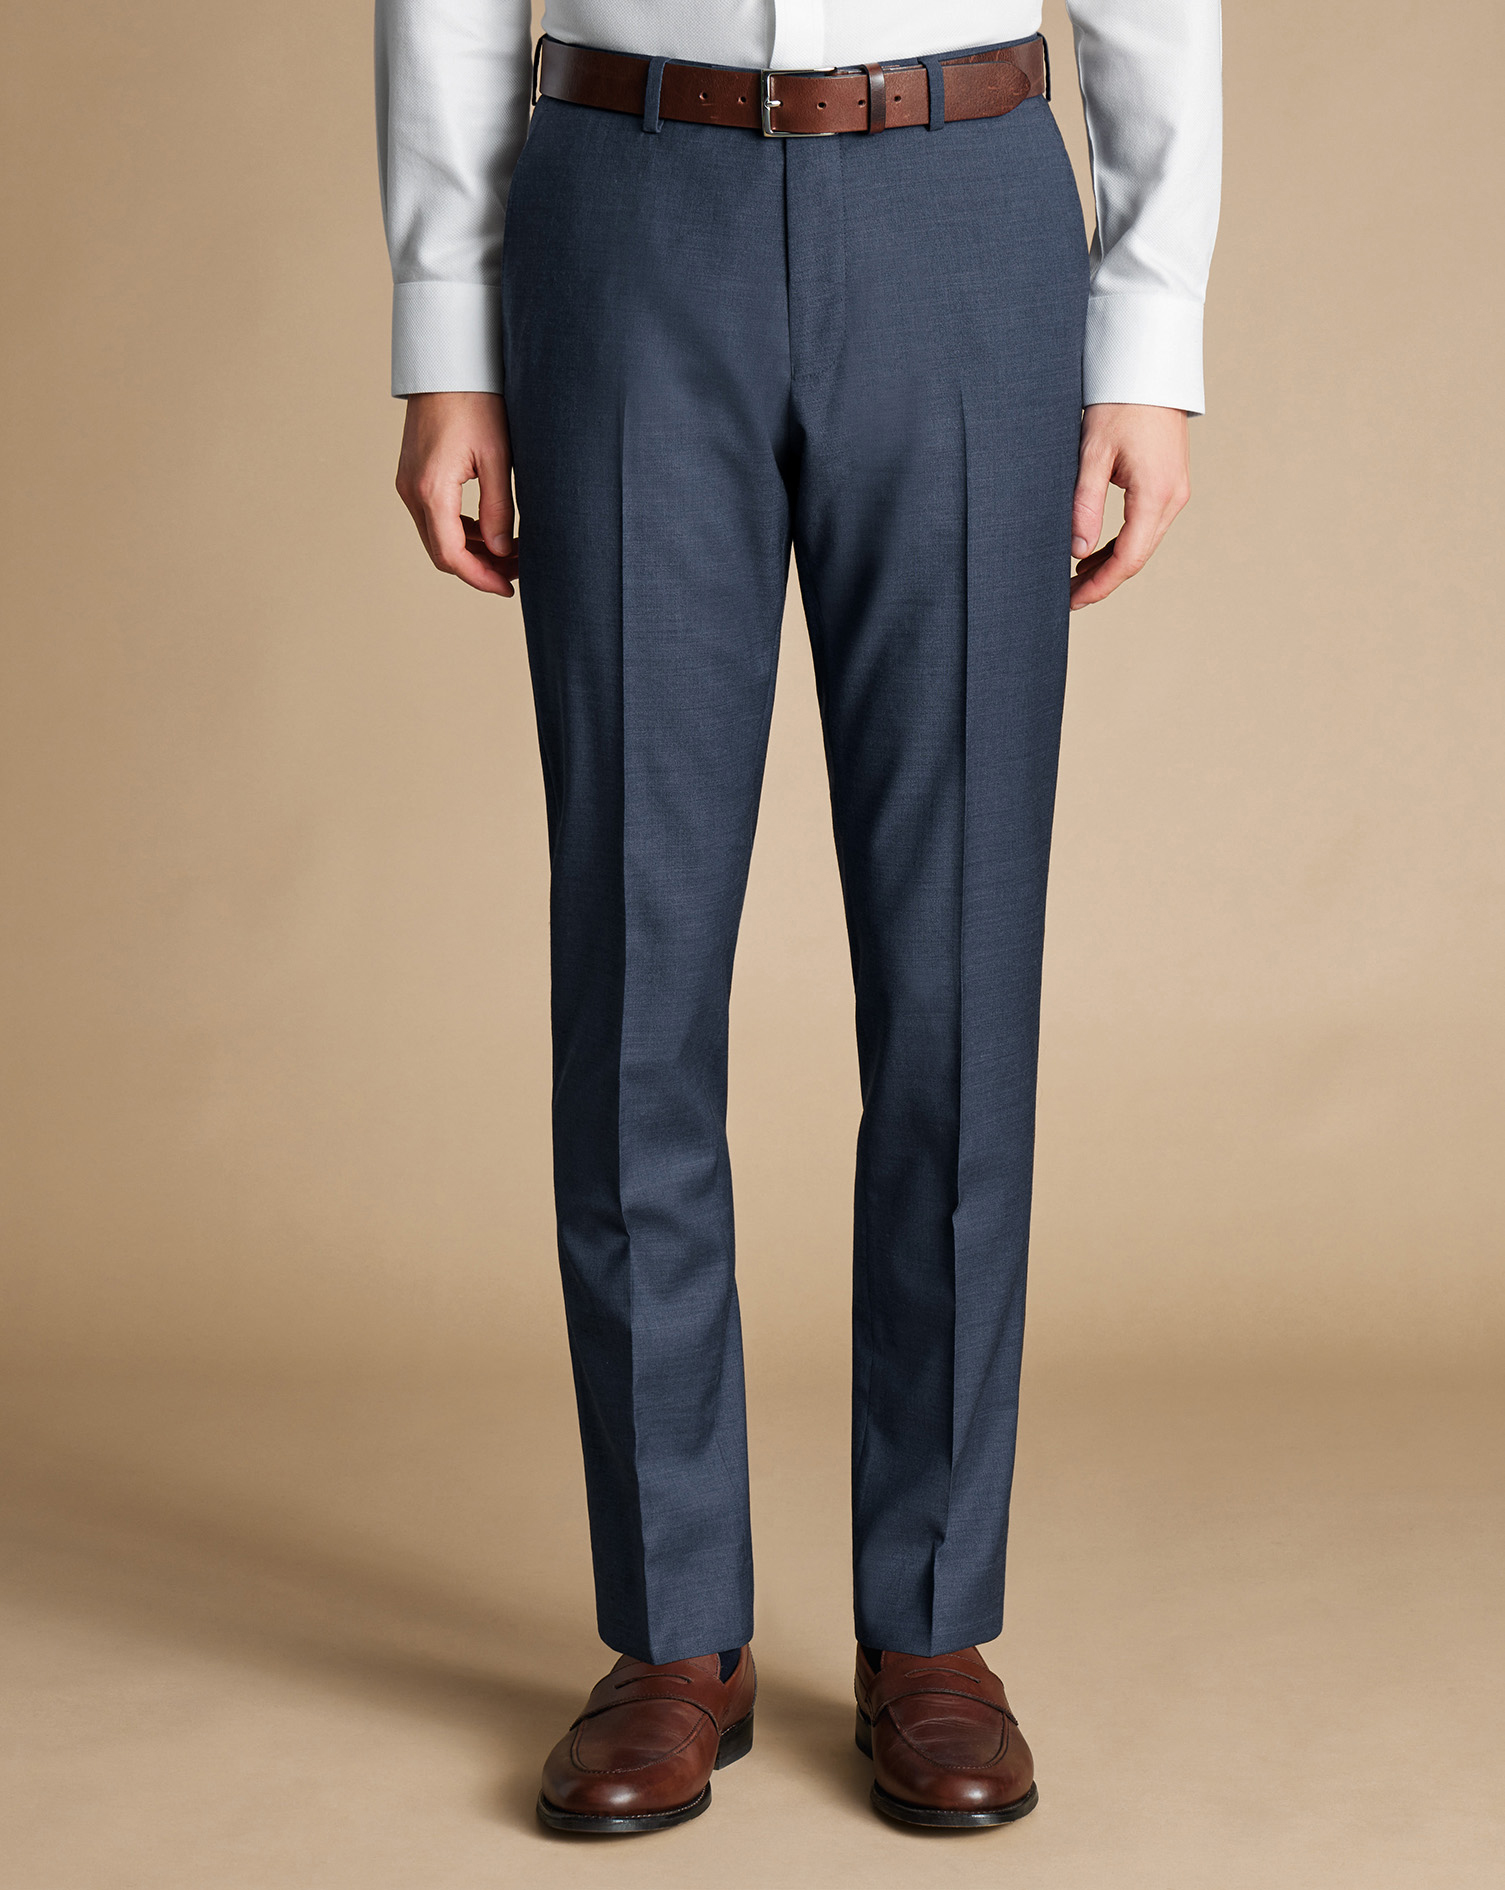 Men's Charles Tyrwhitt Italian Suit Trousers - Heather Blue Size 30/38
